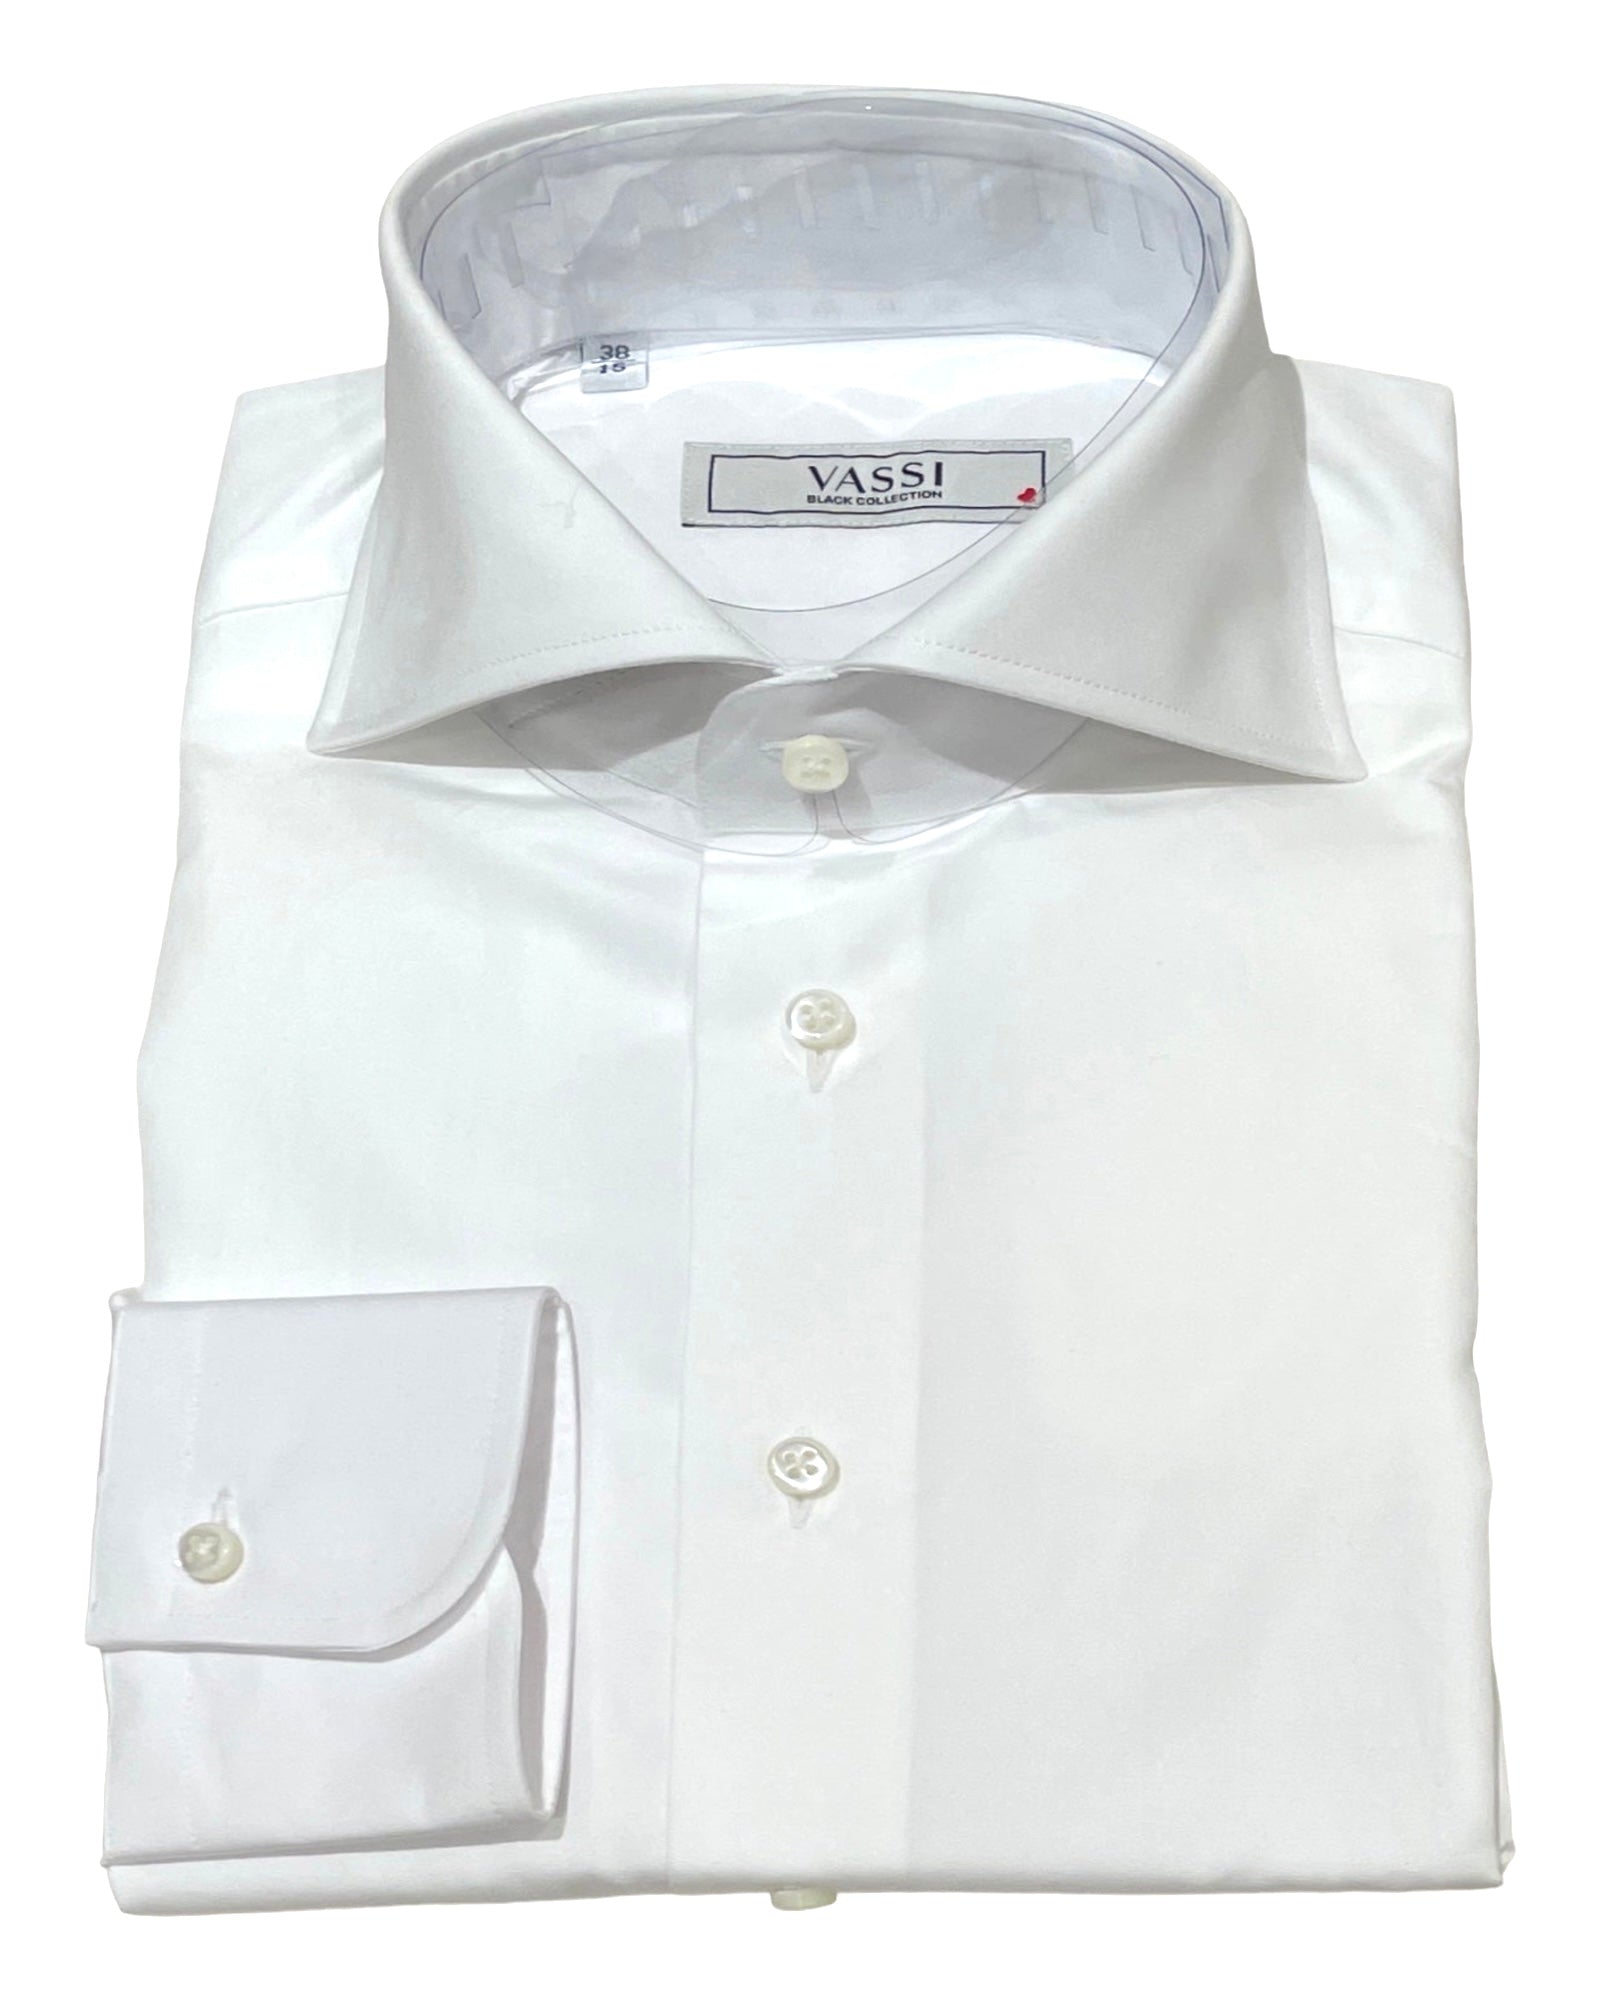 Essential Semi-Spread Collar Dress Shirt, 2 Ply Super 120 -Plain White DRESS SHIRTS15